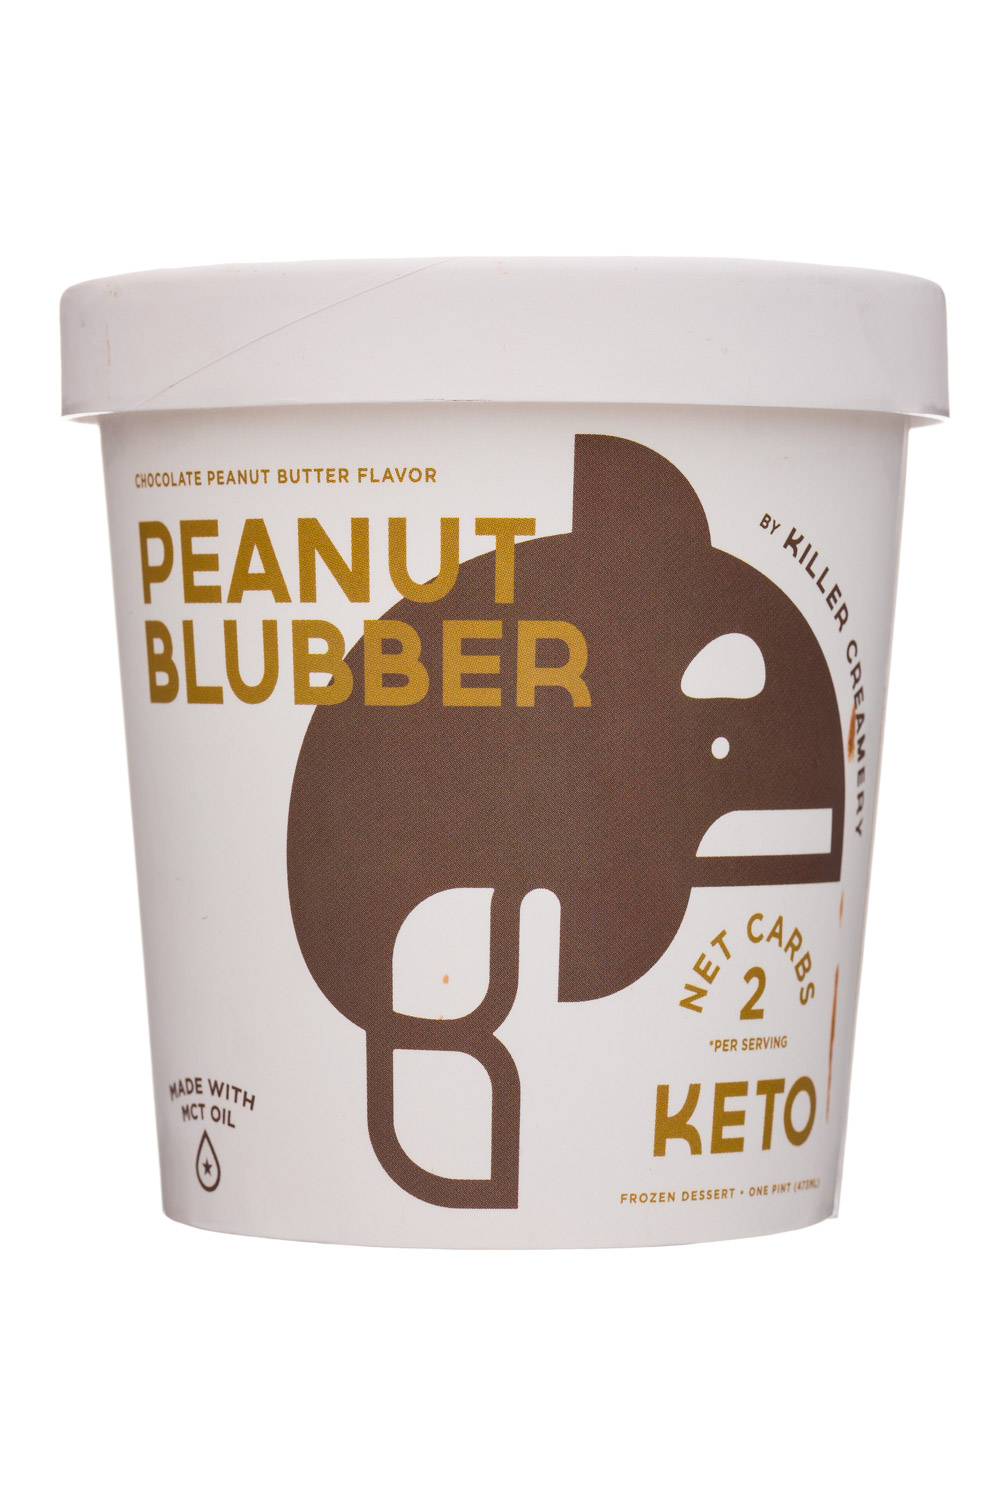 Peanut Blubber